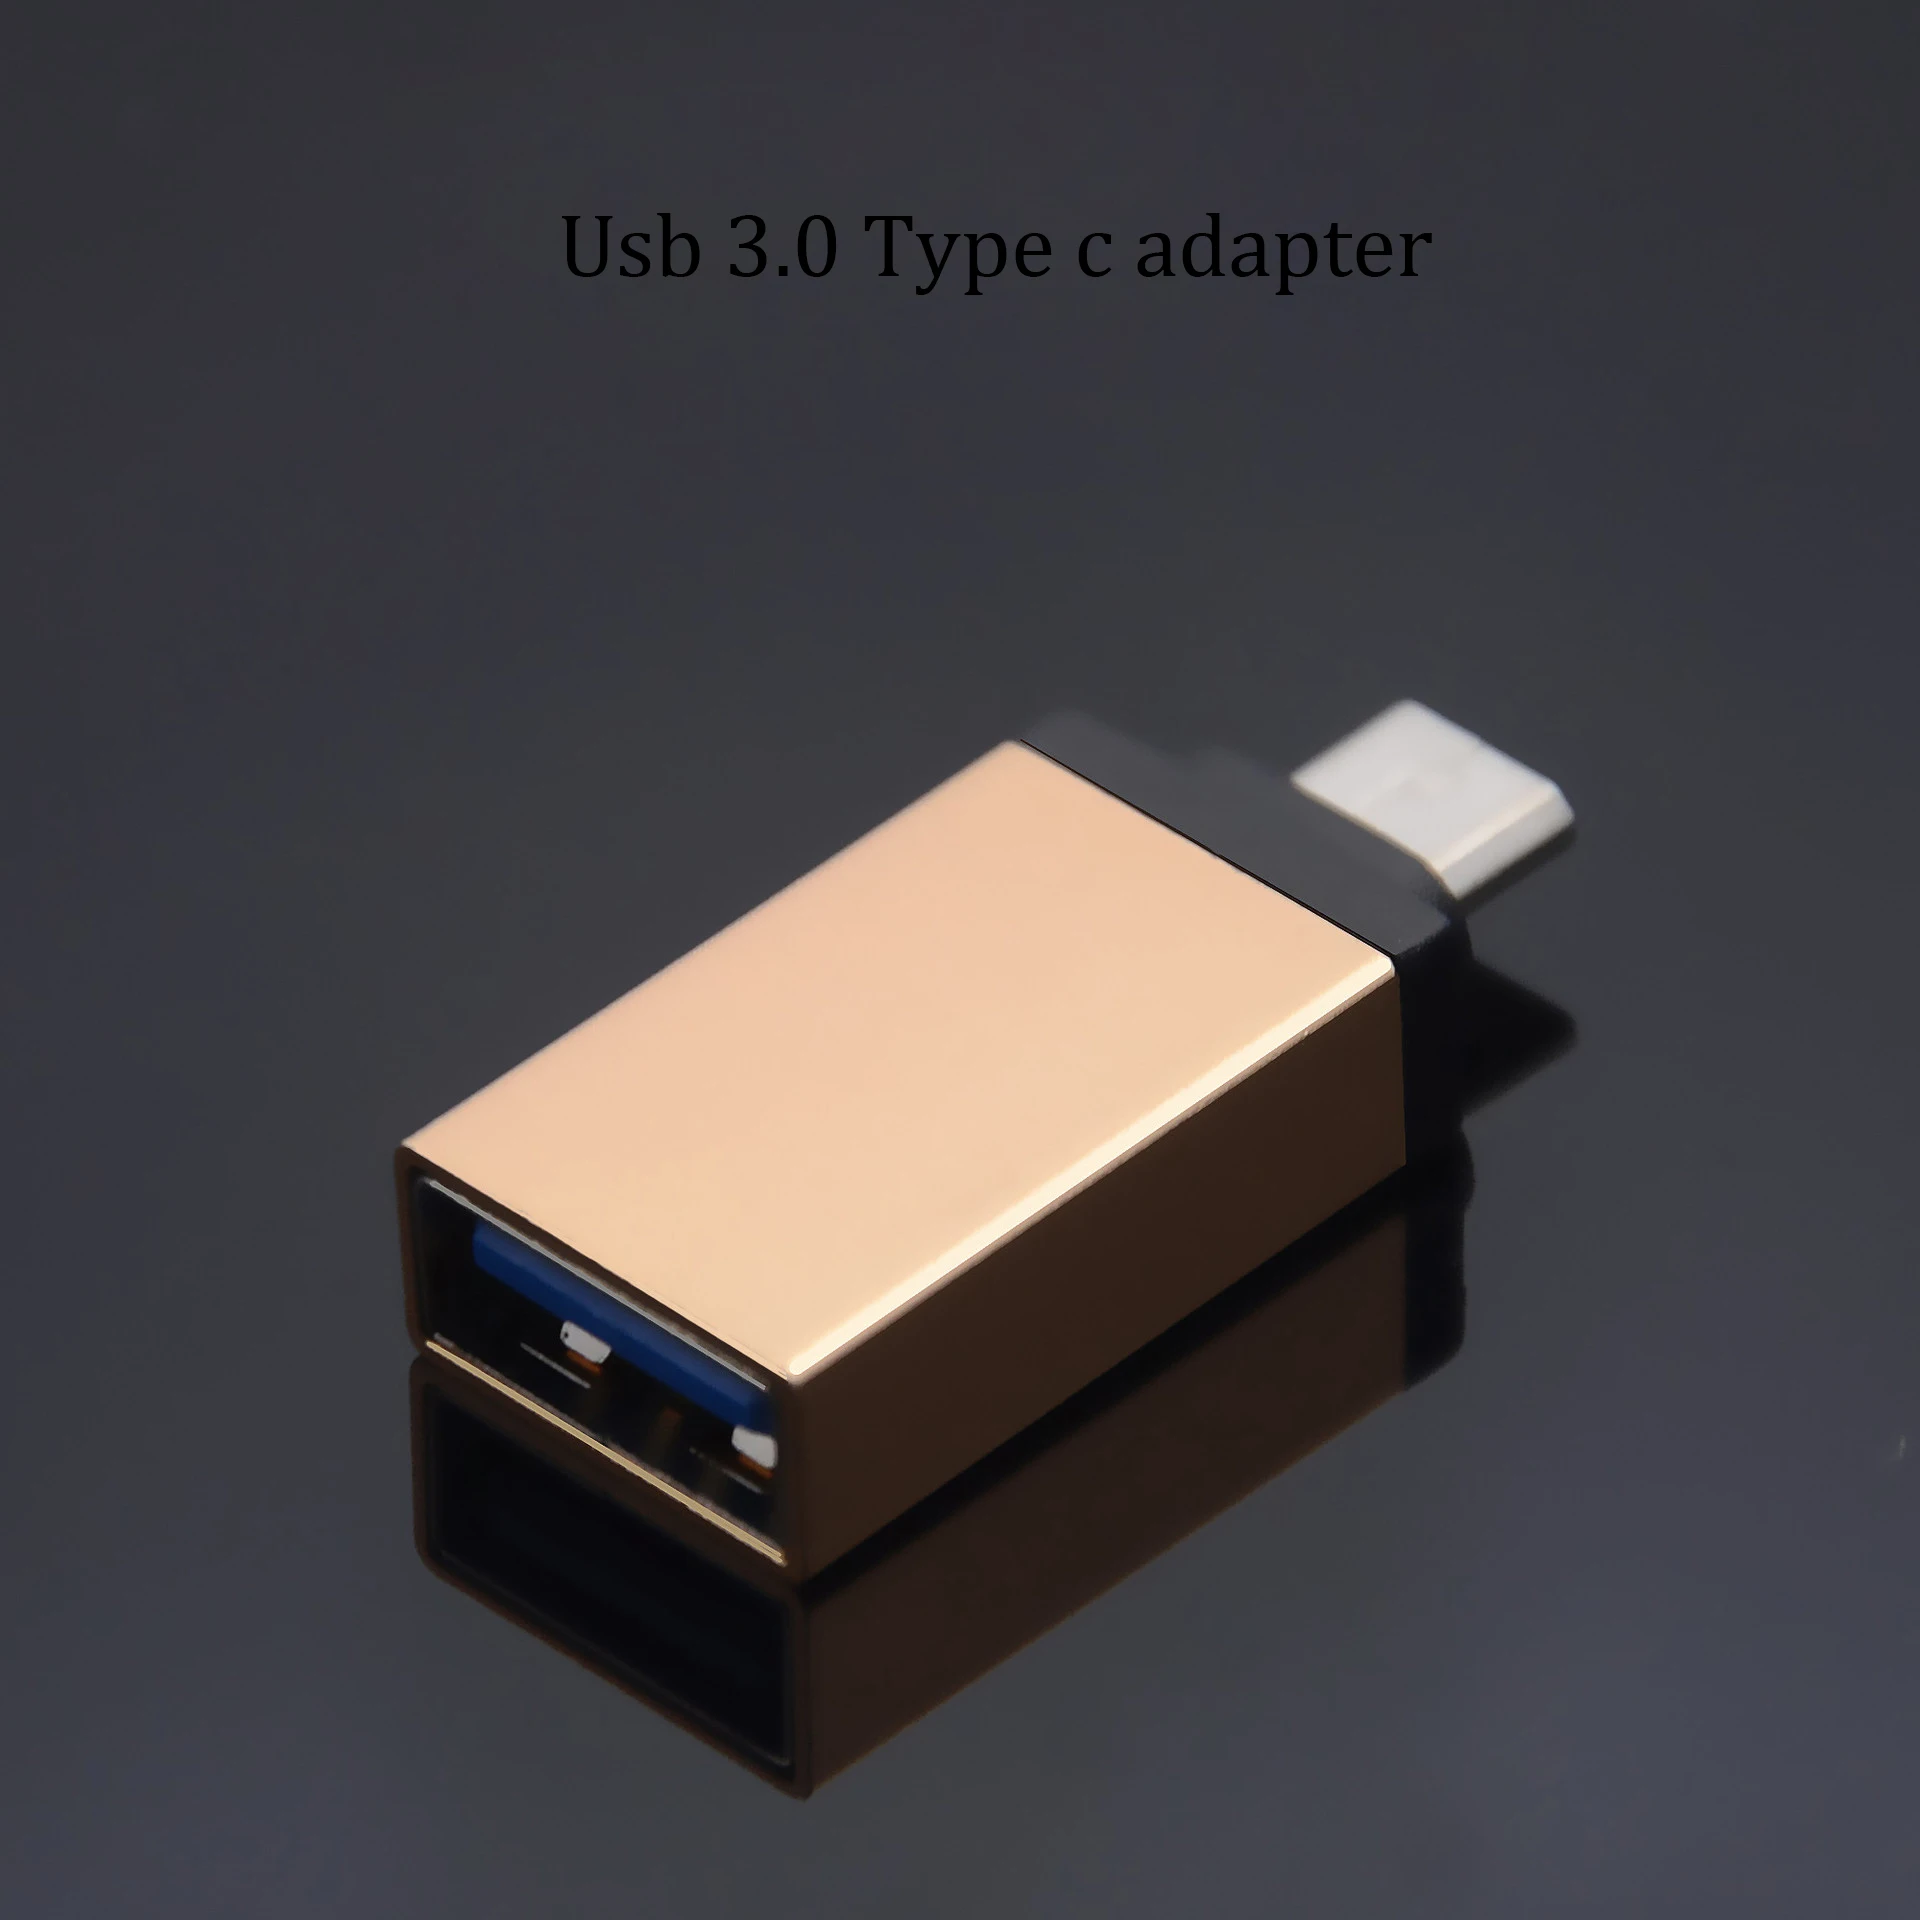 Адаптер Usb 3 0 для type c